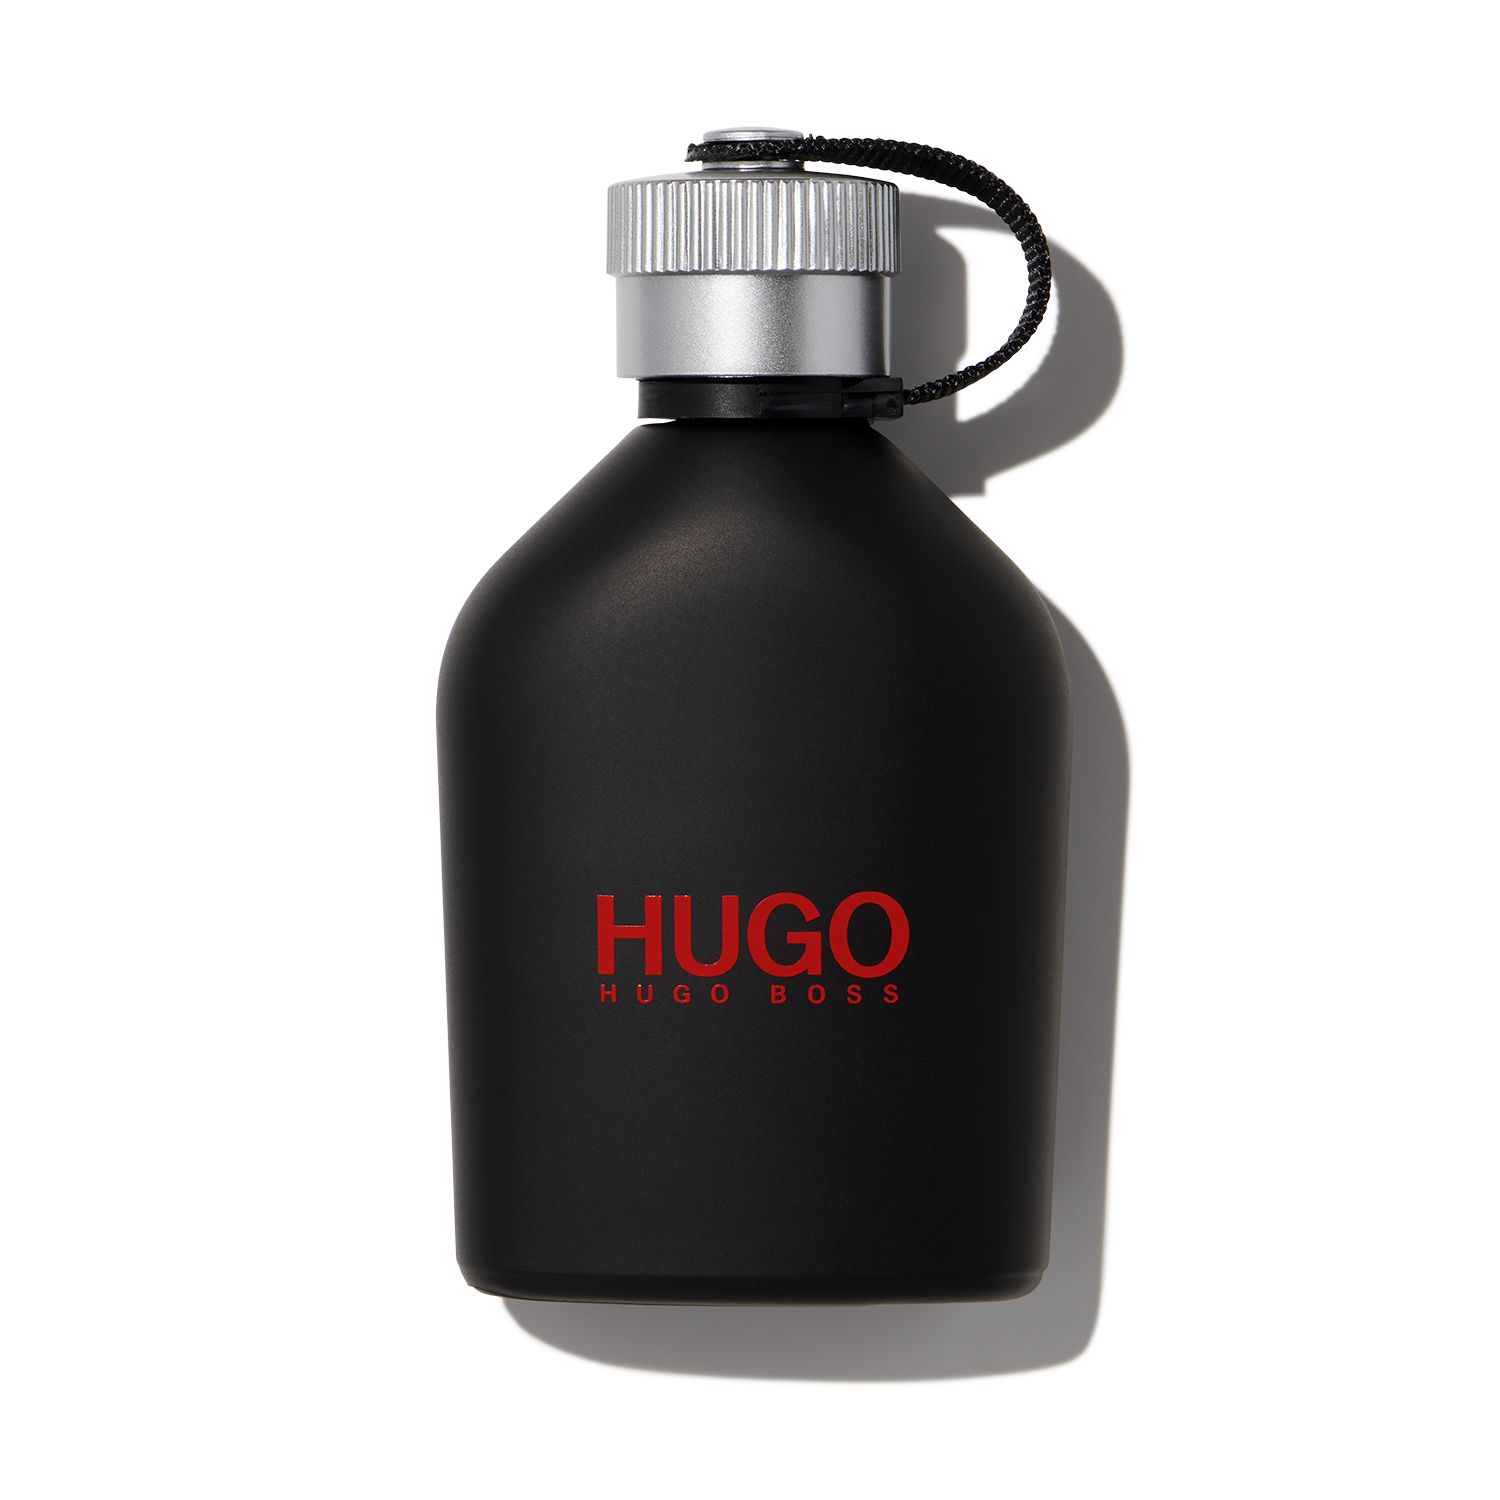 Hugo just different. Хьюго босс Джаст дифферент. Hugo Boss Hugo just different. Хуго босс Джаст дифферент аналог. Hugo just different 2021.